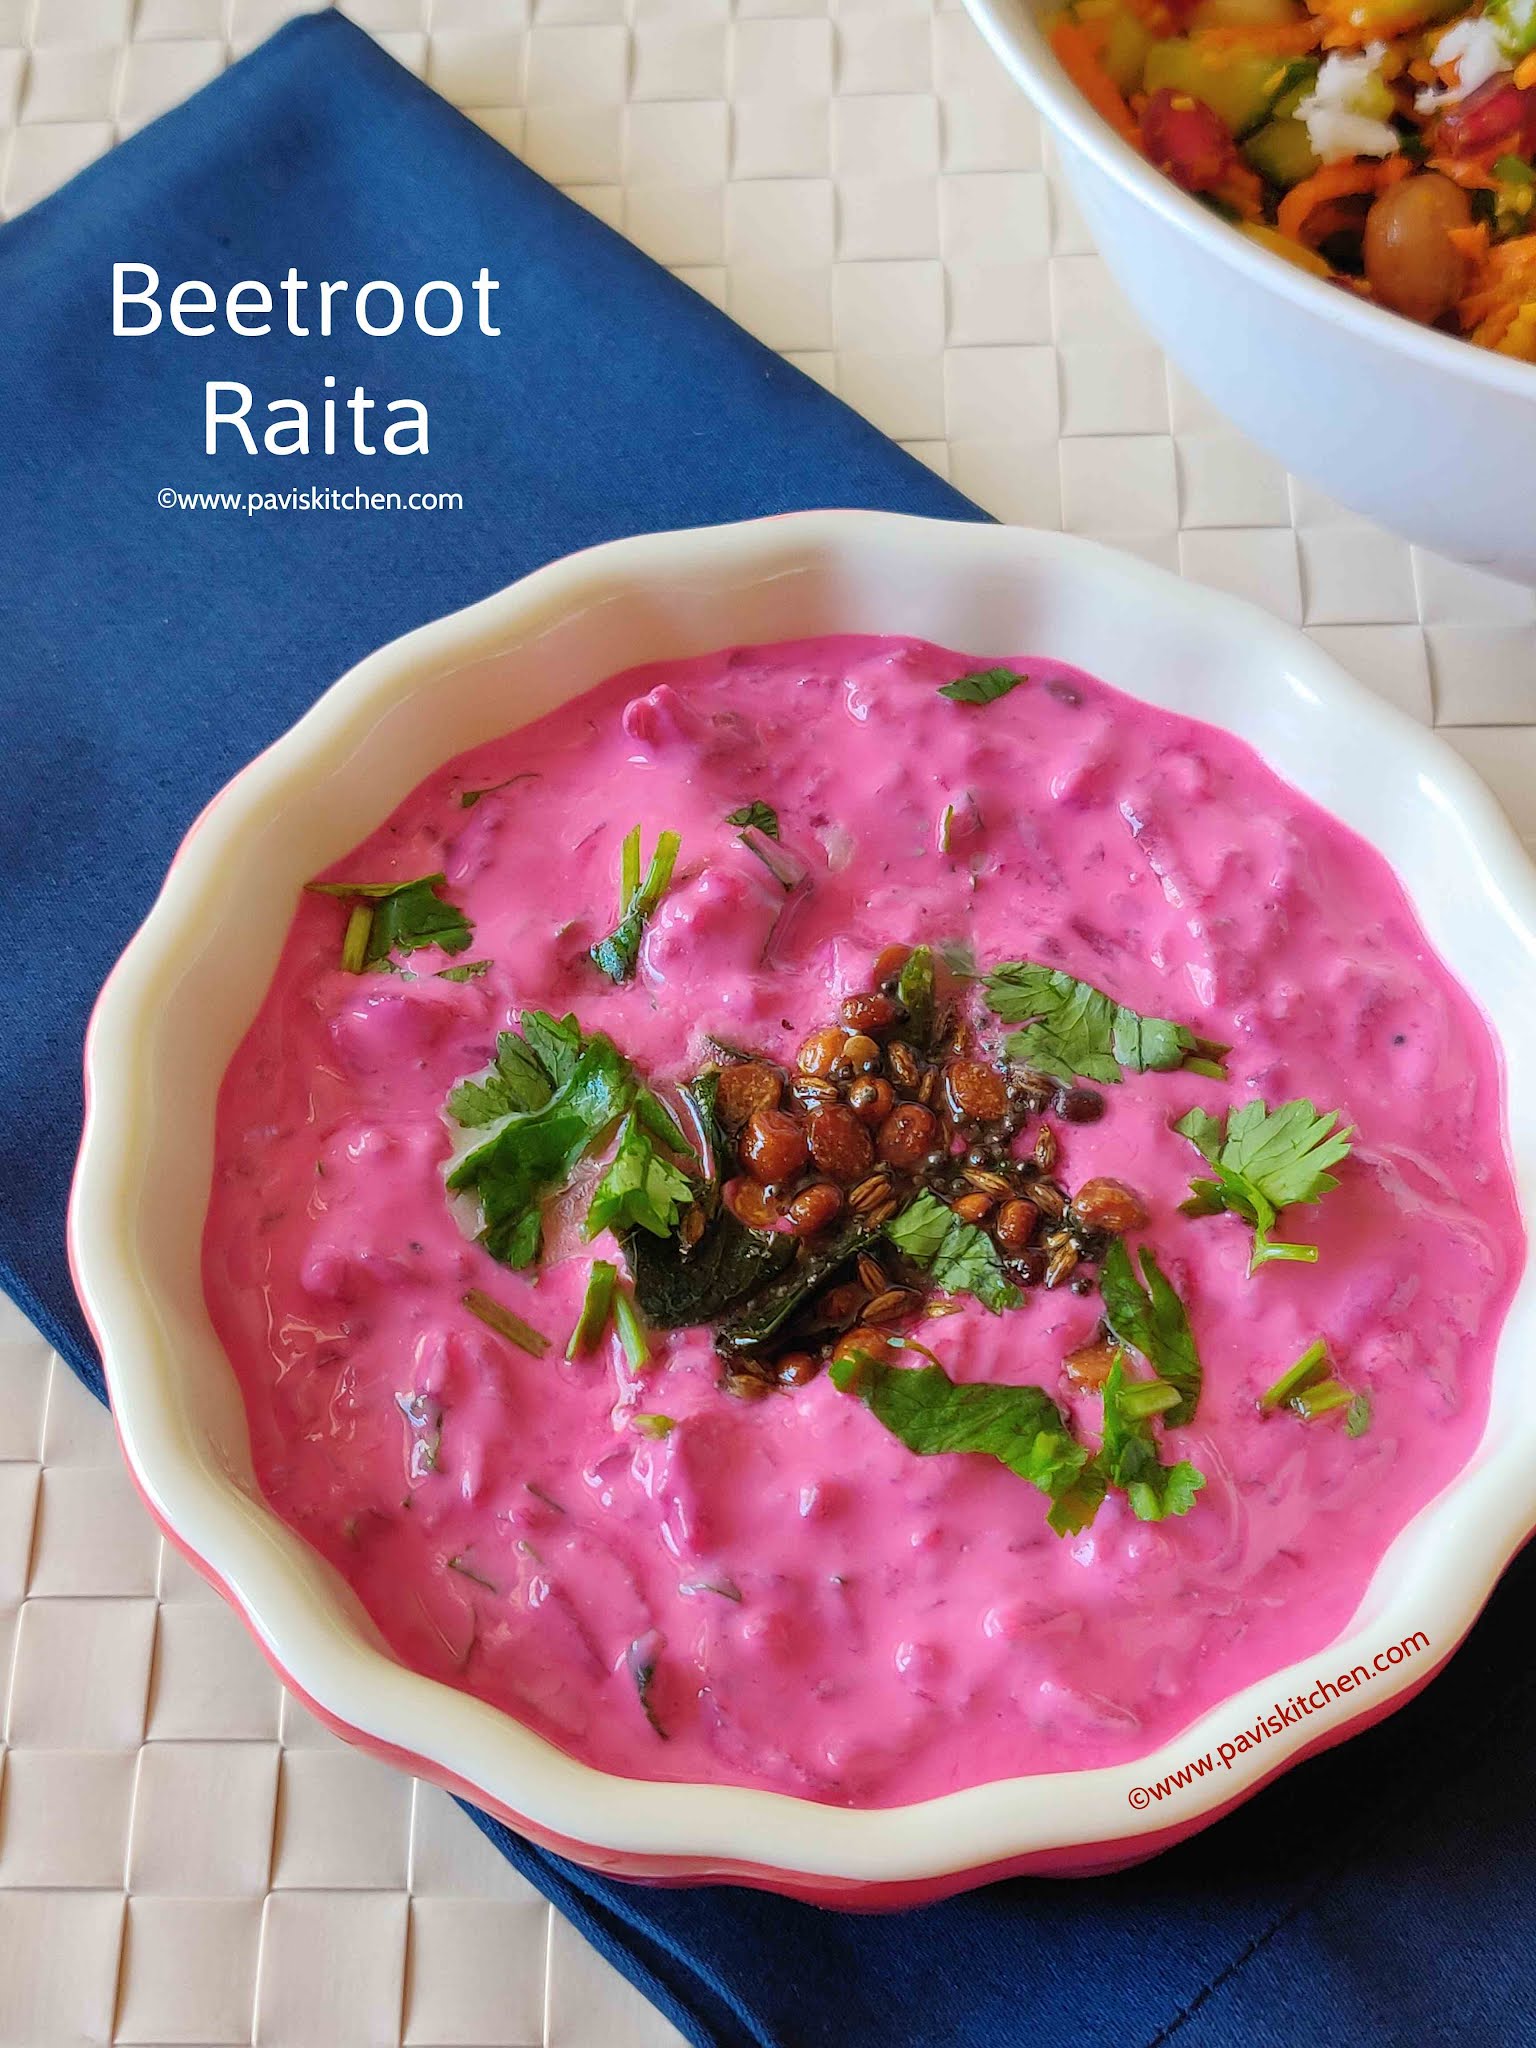 Beetroot raita recipe | Beetroot pachadi recipe | Indian yogurt side dish